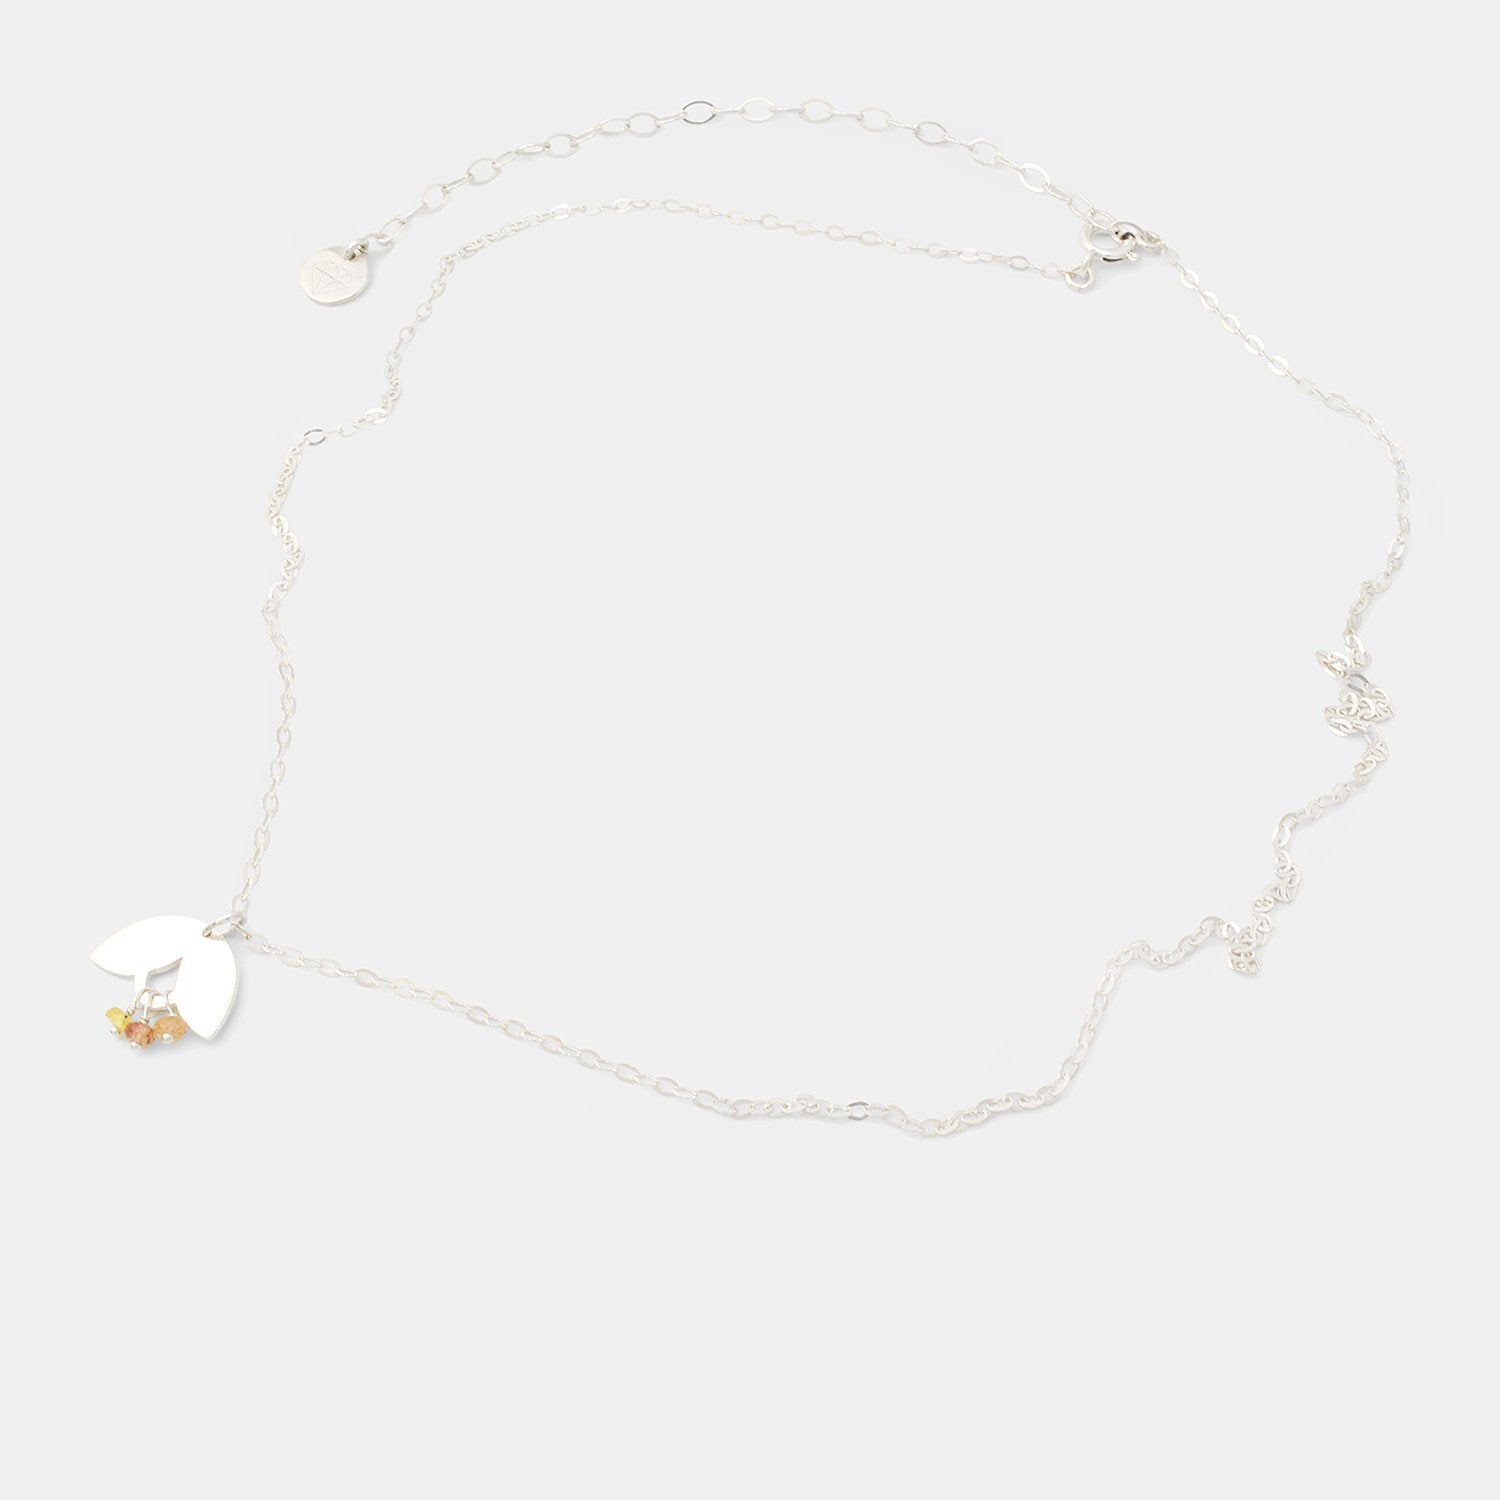 Leaves & sapphires necklace - Simone Walsh Jewellery Australia